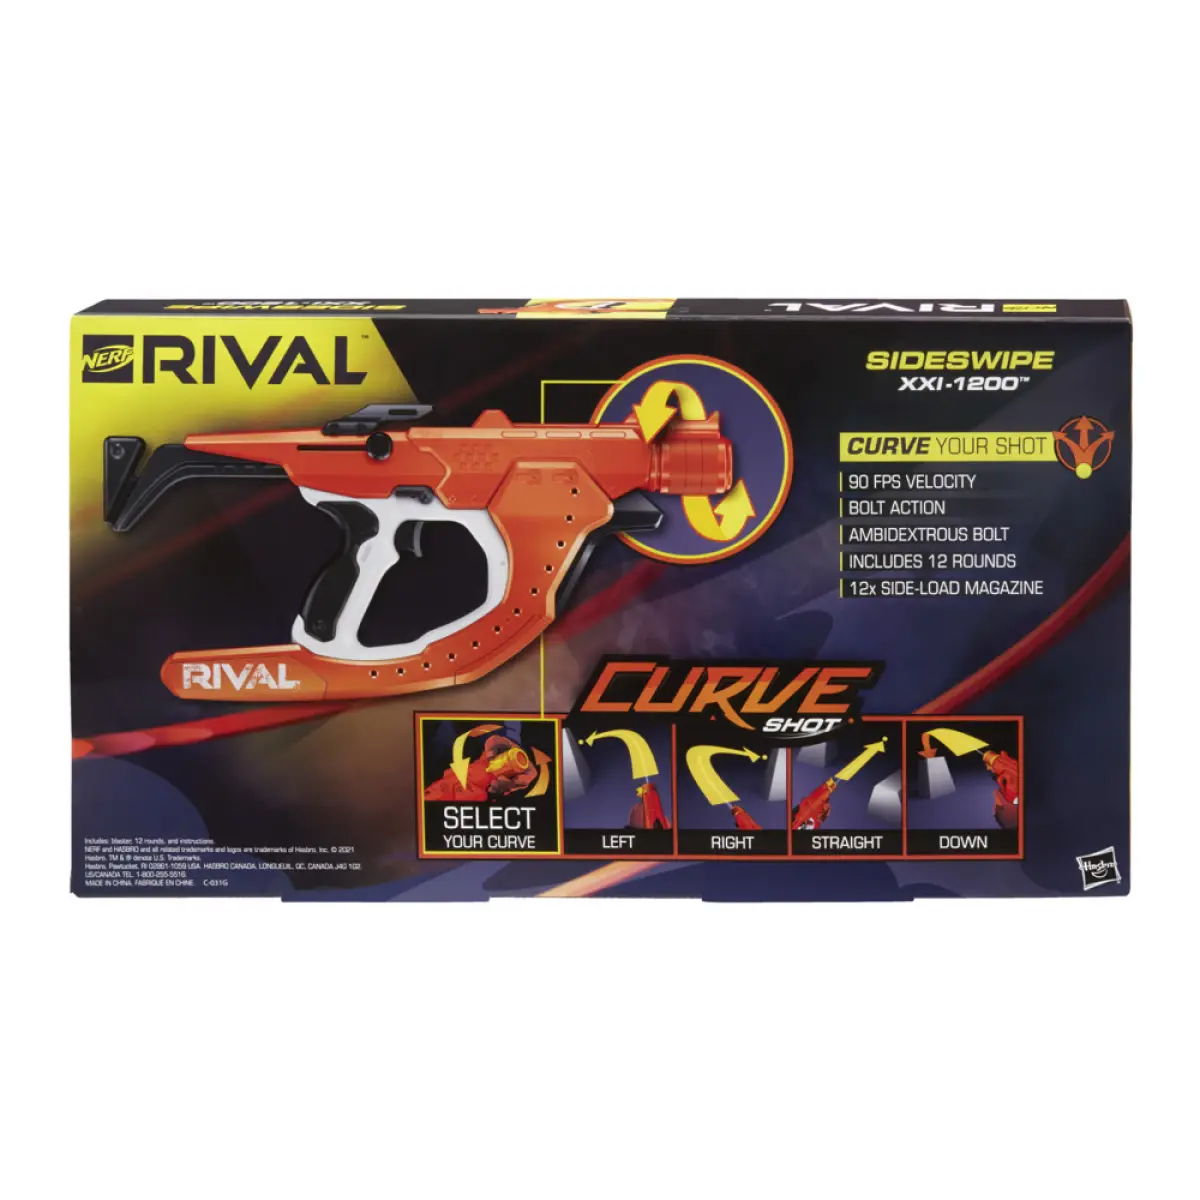 Nerf Rival Curve Shot Sideswipe Xxi-1200 Blaster, 14Yrs+